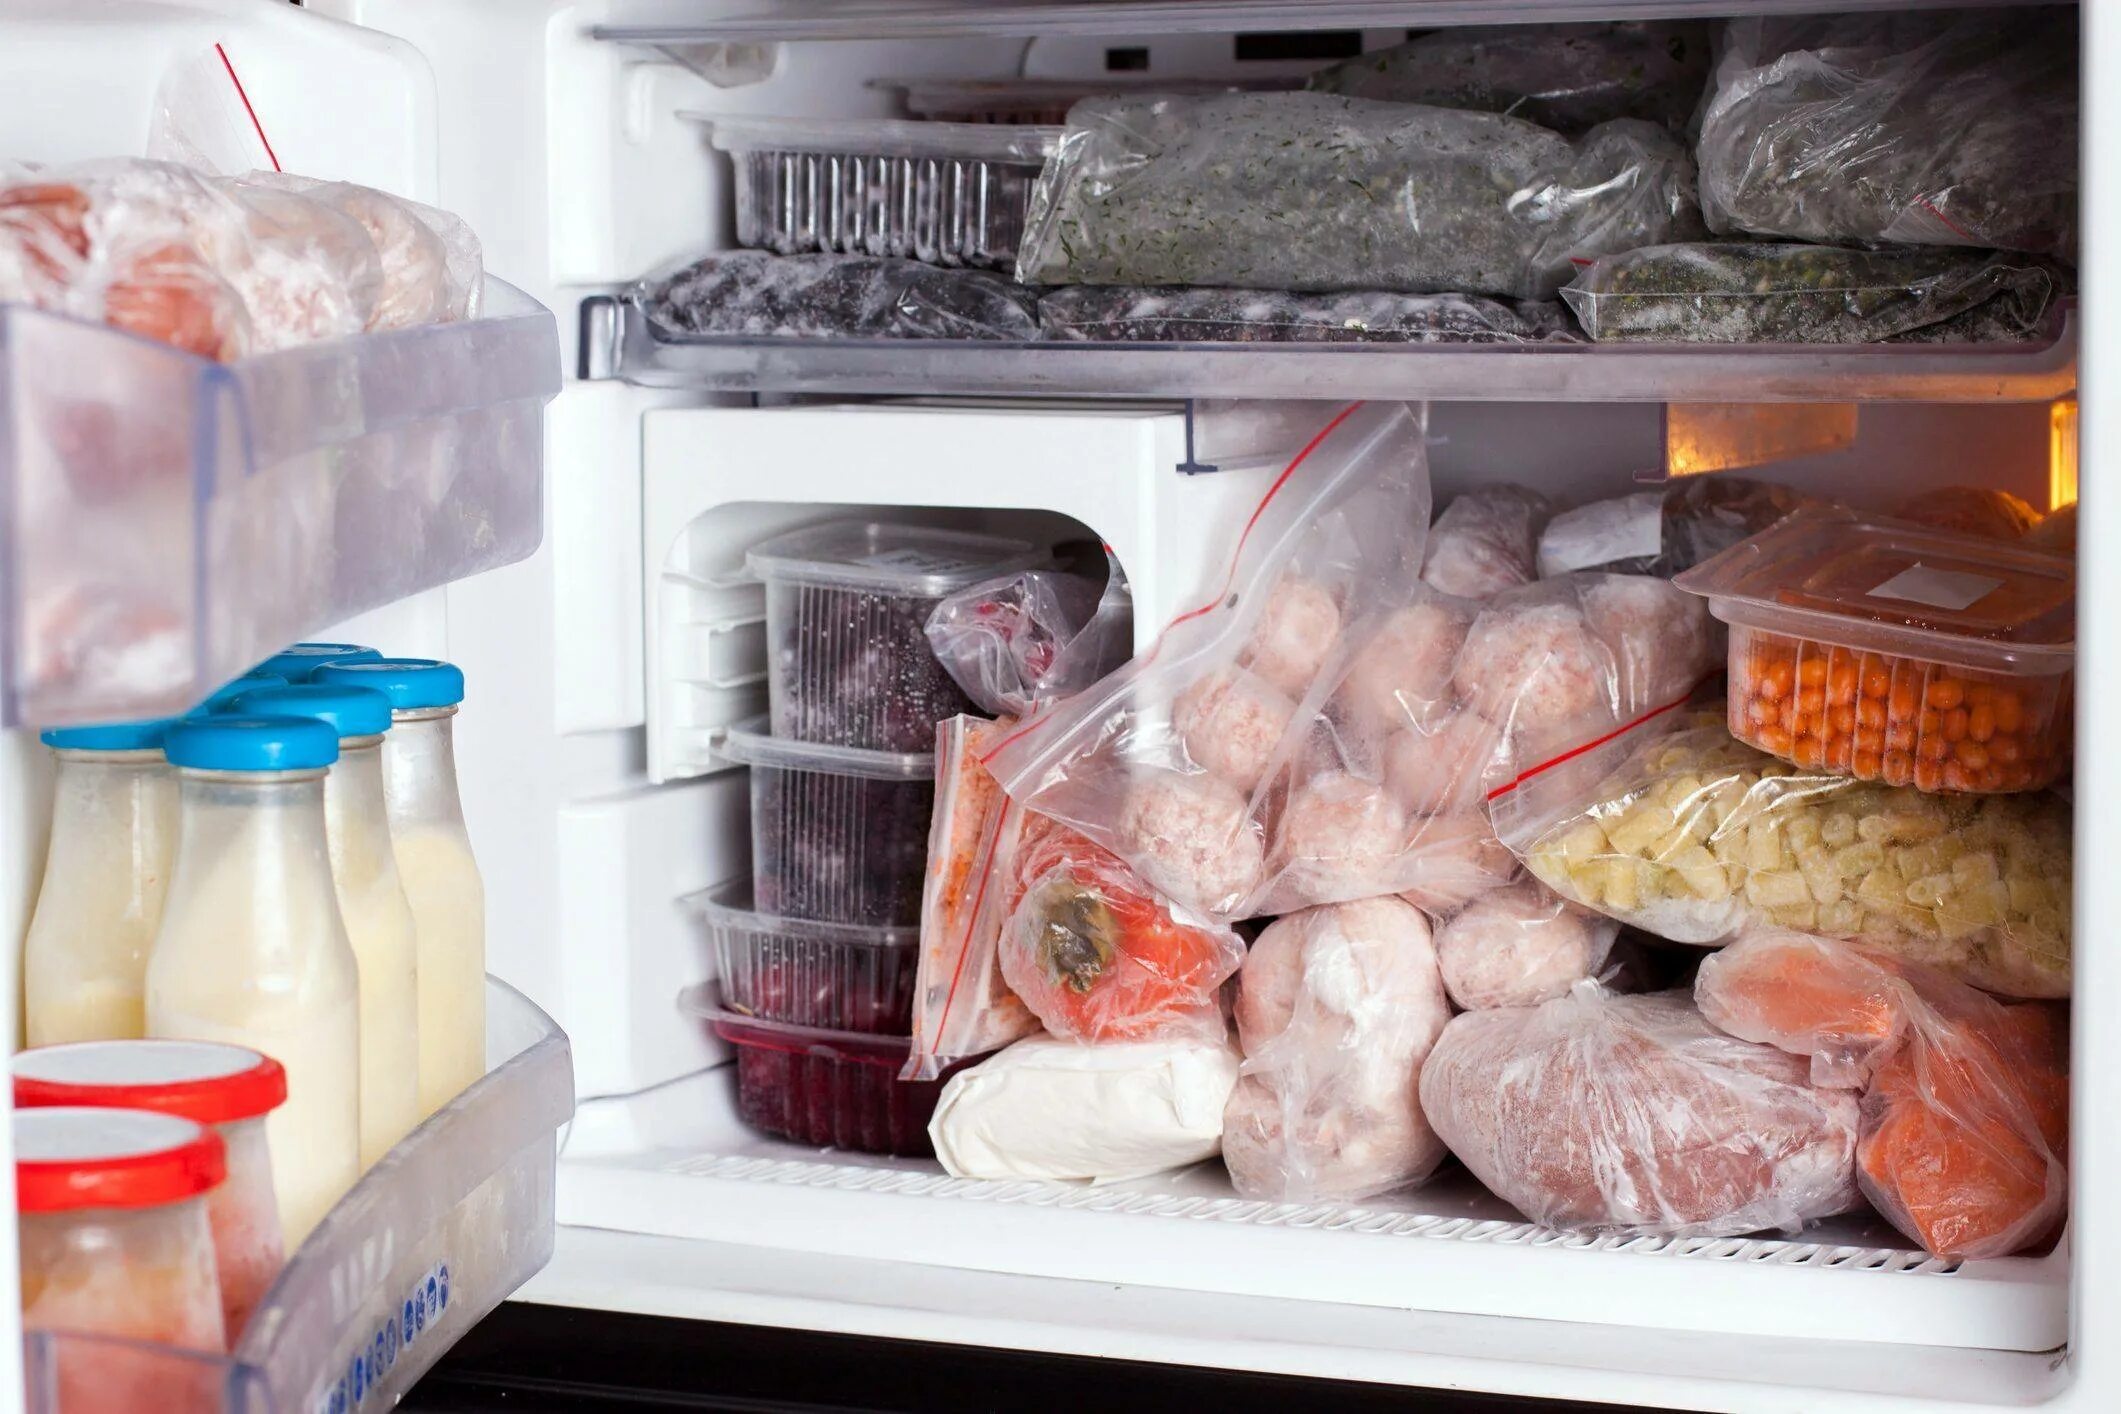 Производство дома продуктов. Хранение продуктов. Хранение в холодильнике. Продукты в морозилке. Хранение в морозилке.